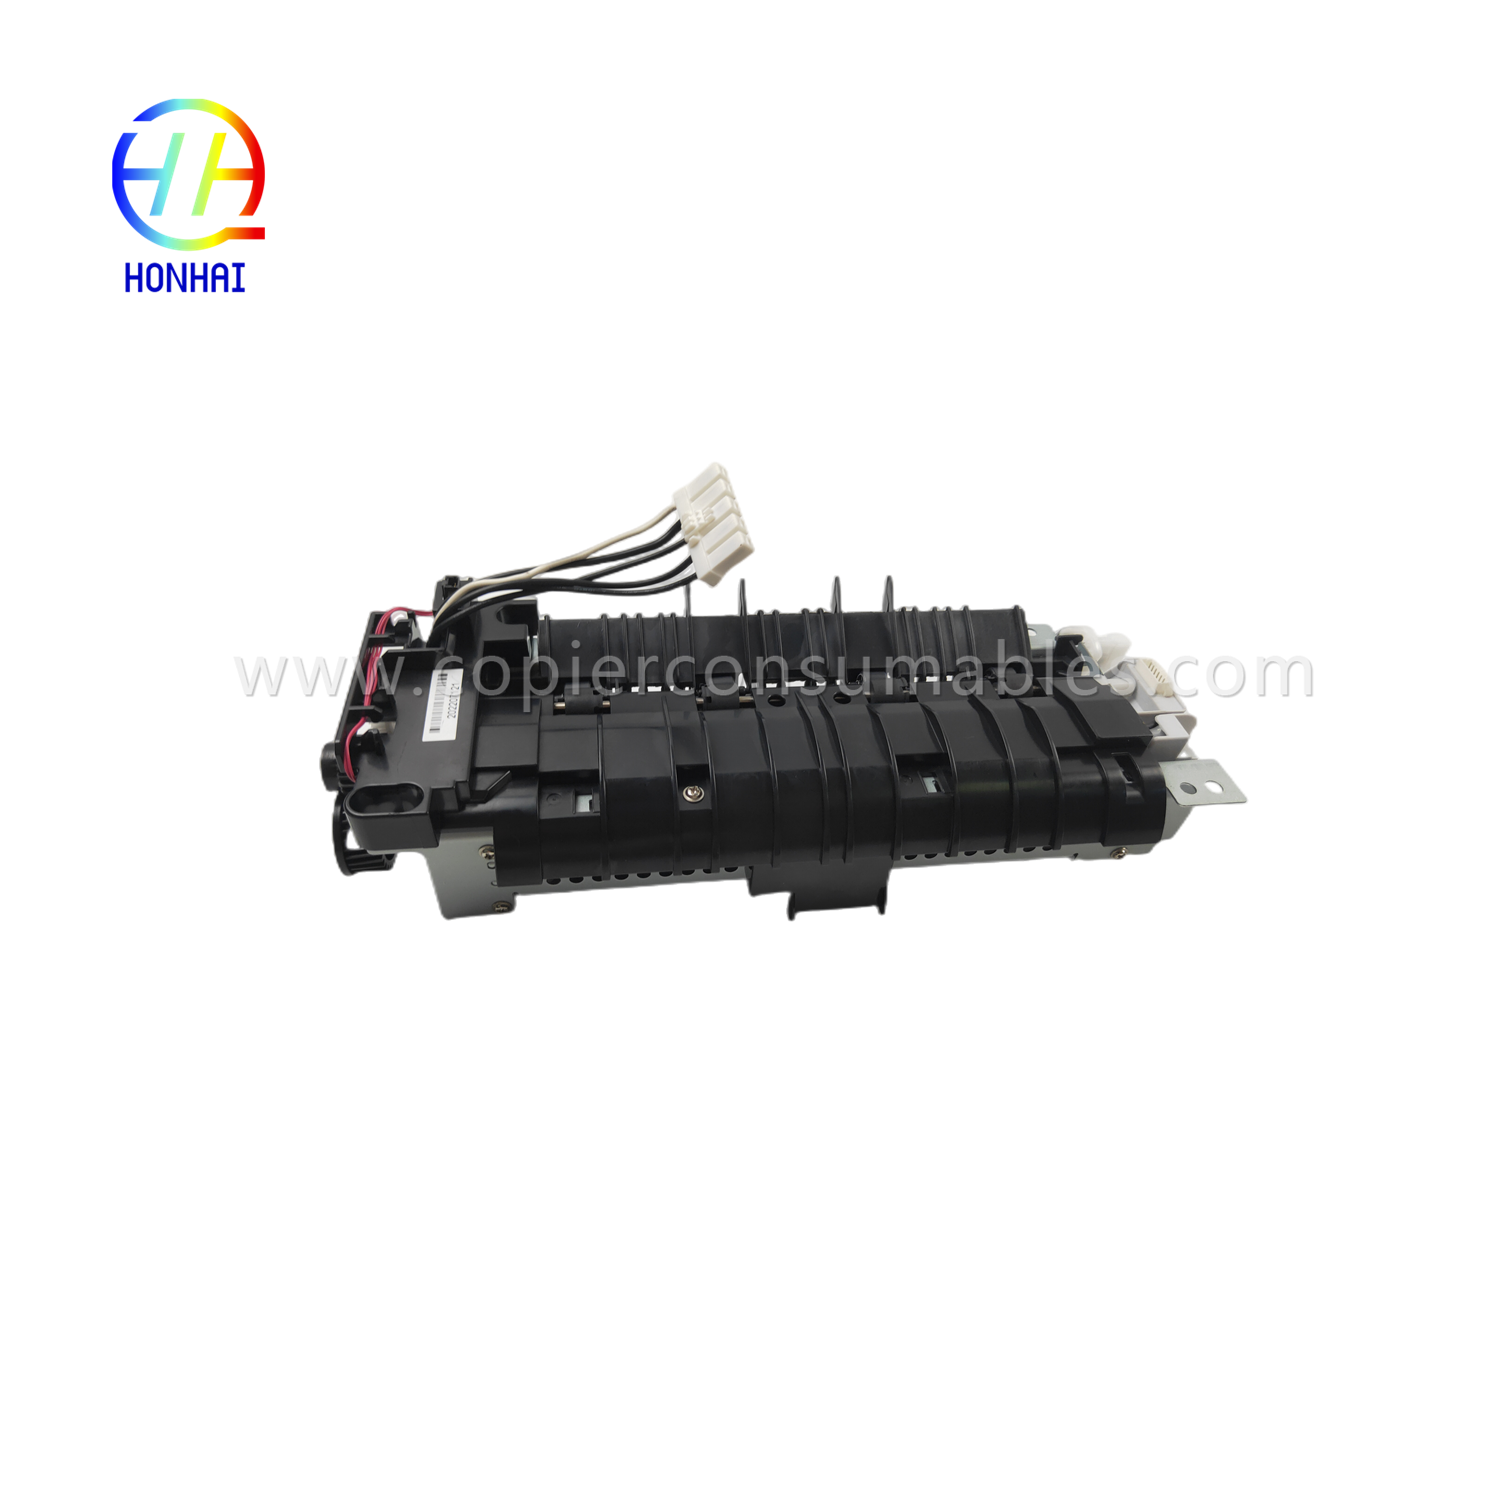 https://www.copierconsumables.com/fuser-assembly-220v-japan-for-hp-521-525-m521-m525-rm1-8508-rm1-8508-000-fuser-unit-product/